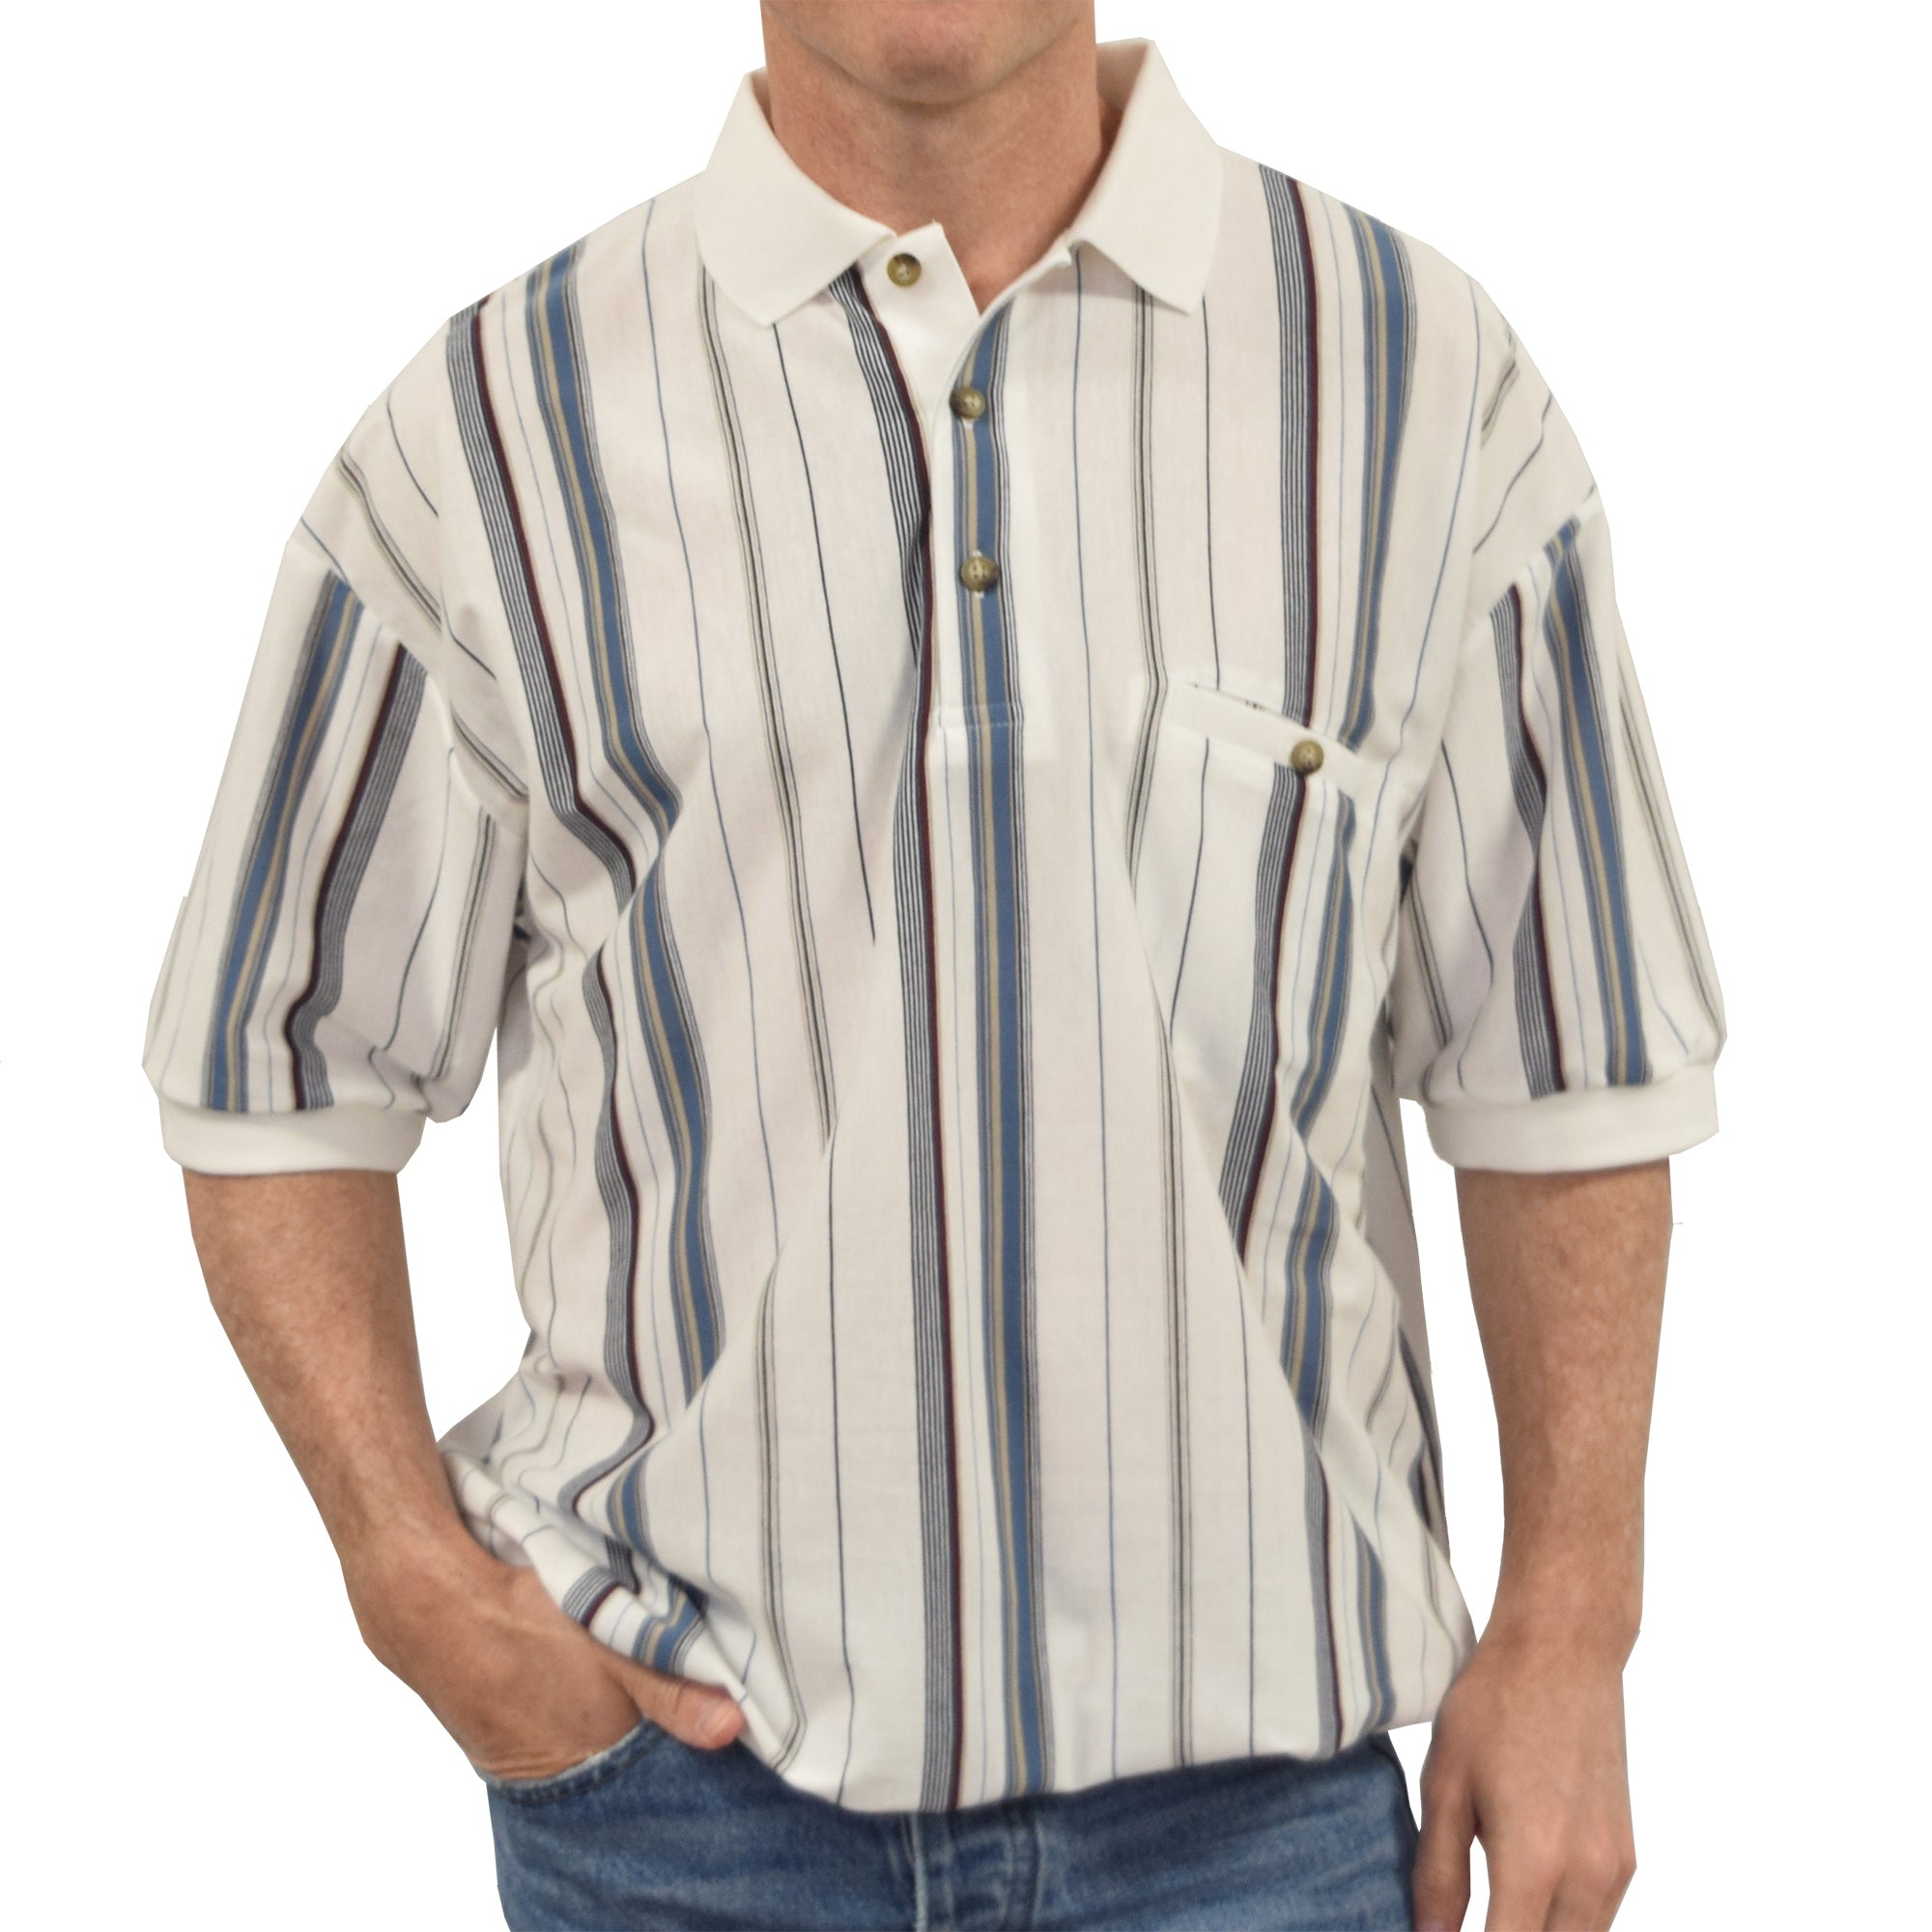 Classics By Palmland Vertical Short Sleeve Banded Bottom Shirt 6090-V1 White